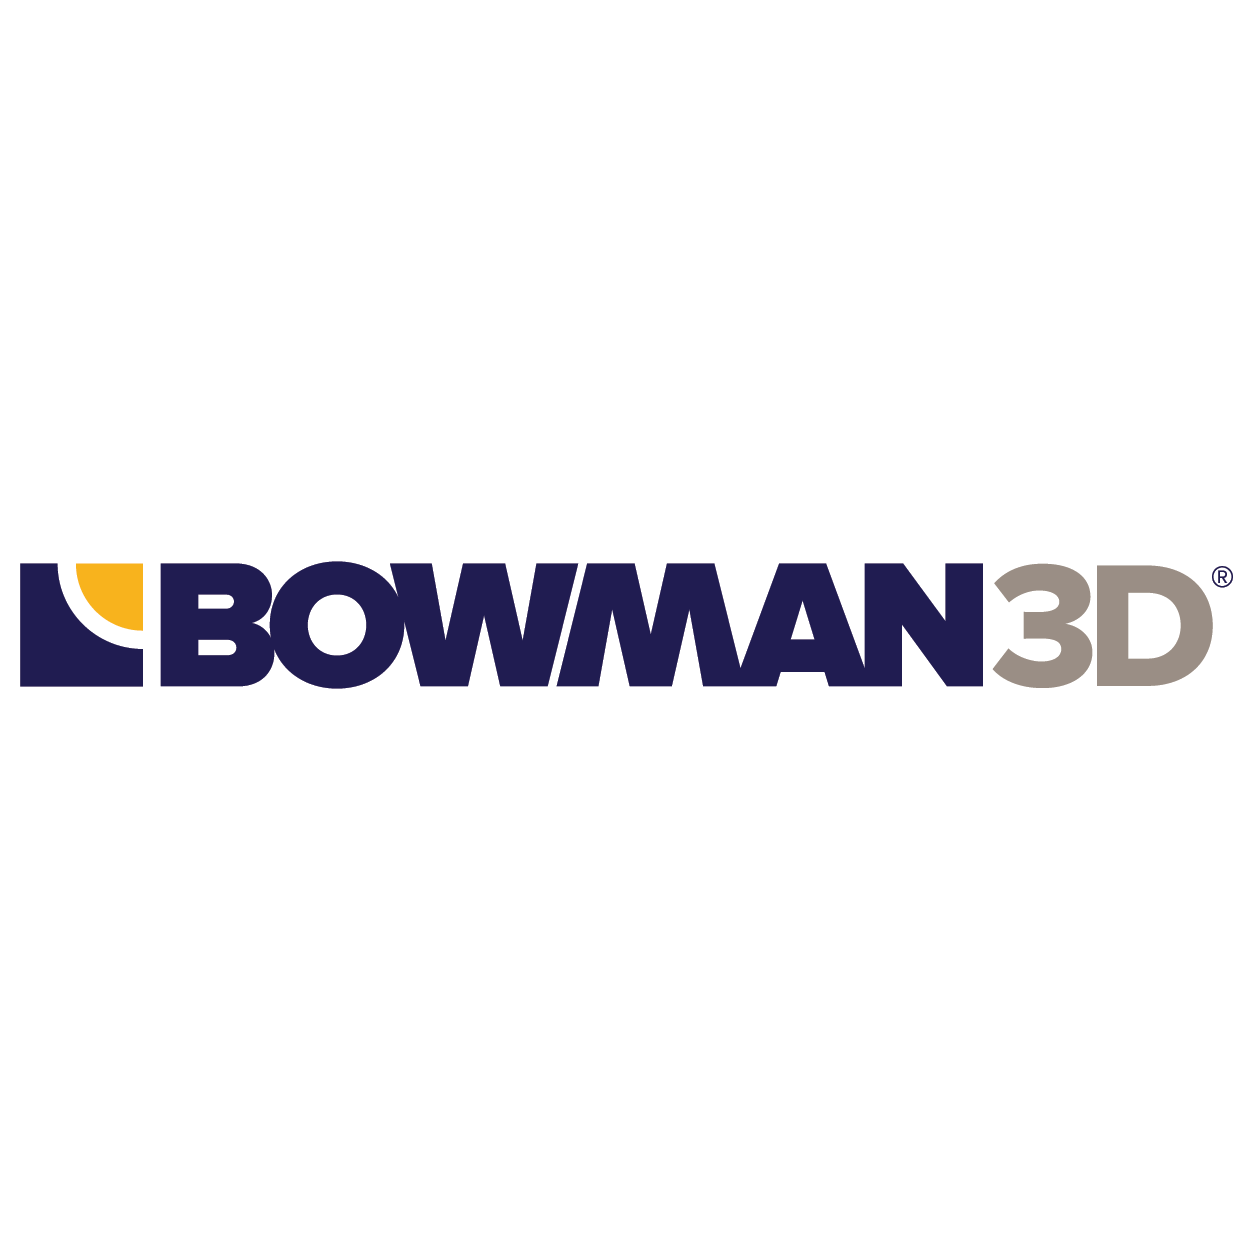 BOWMAN 3D Logo